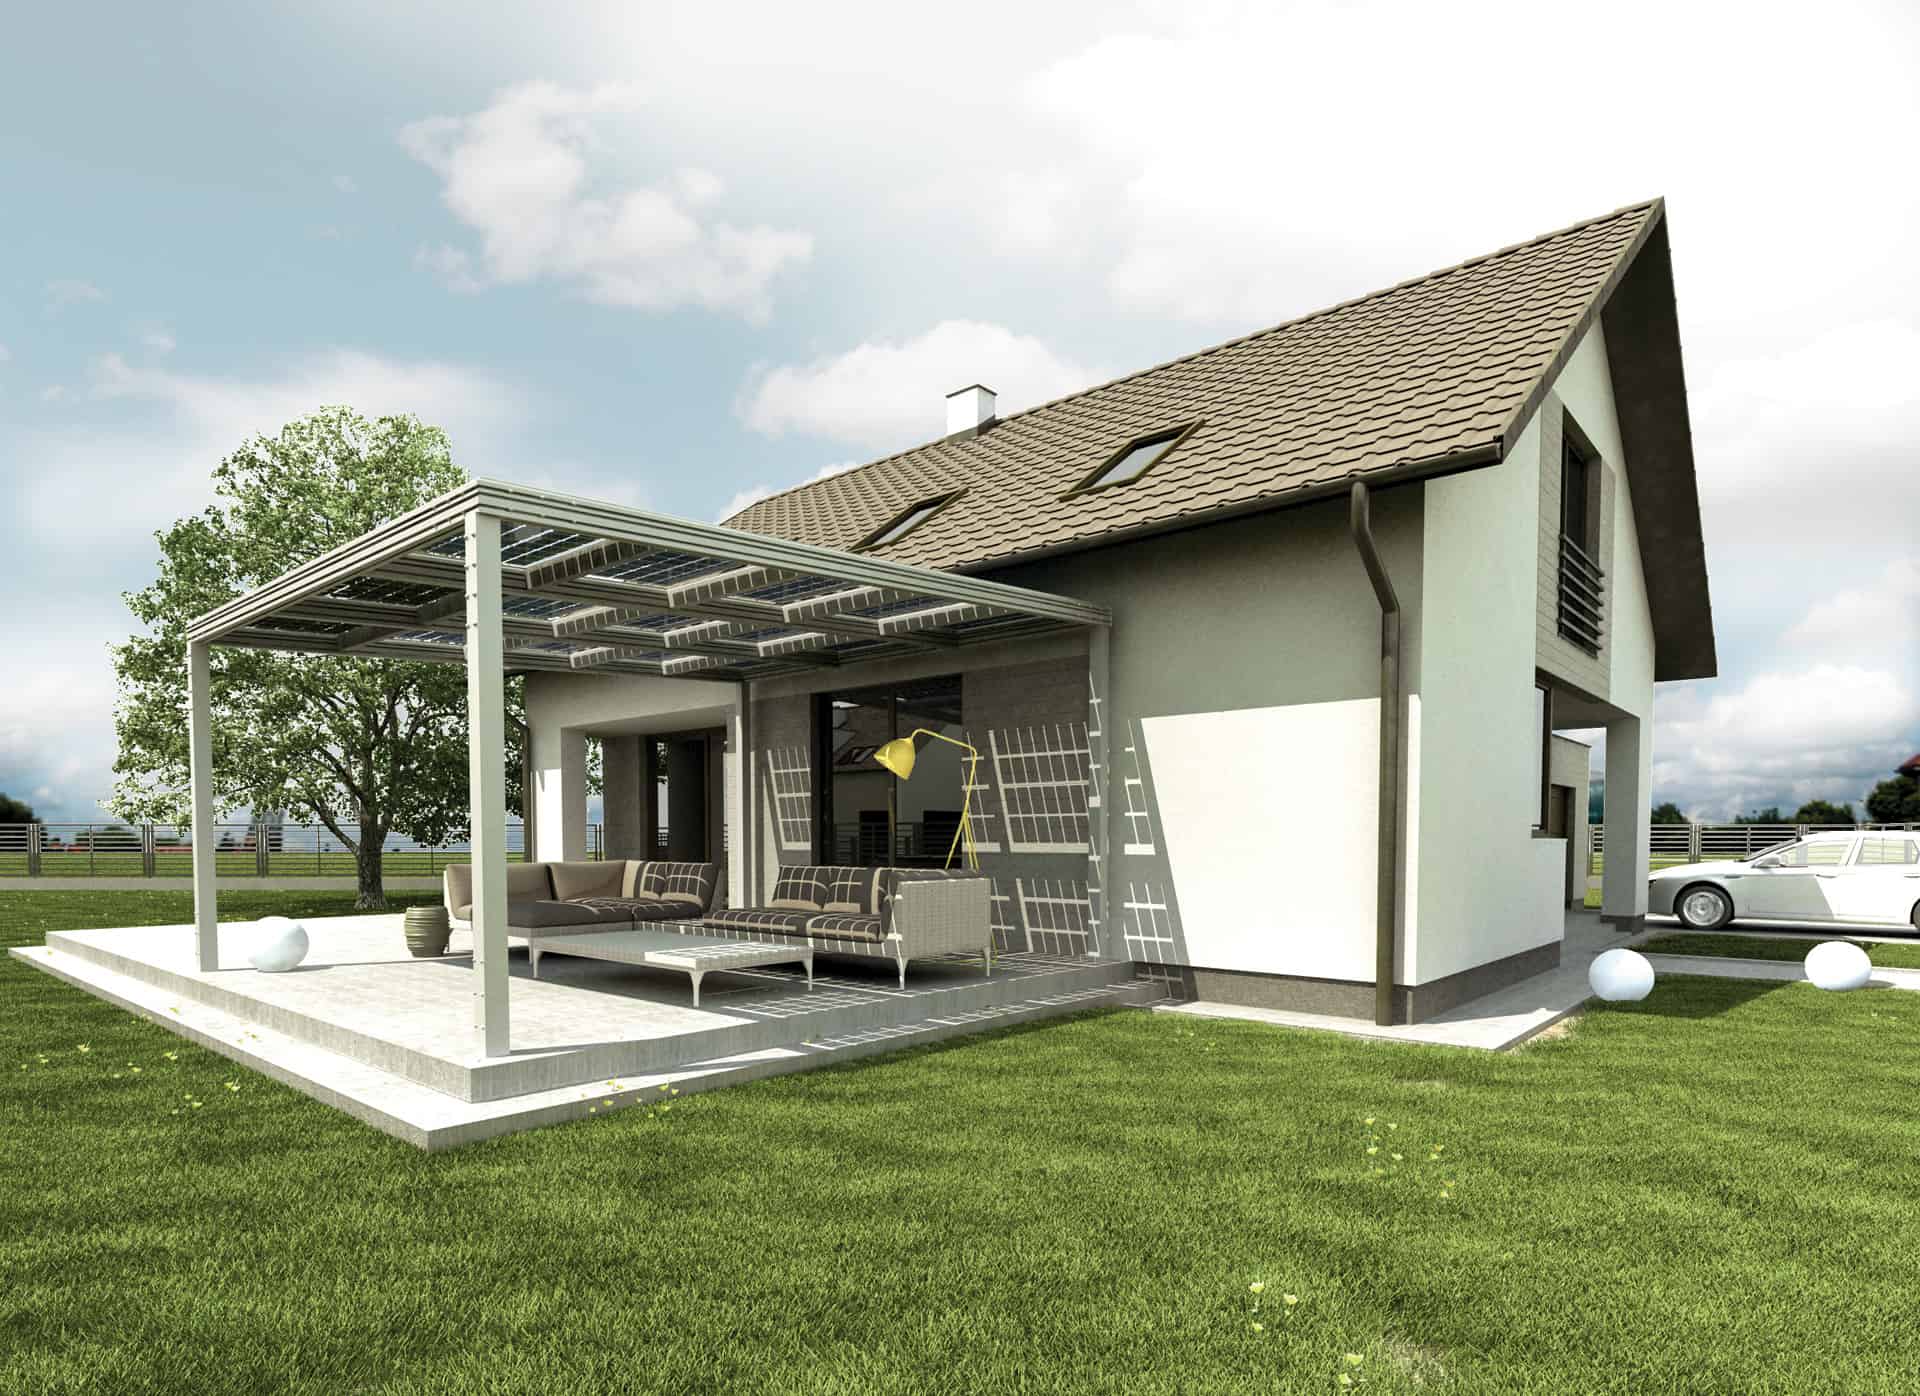 Concept / PV patio canopy